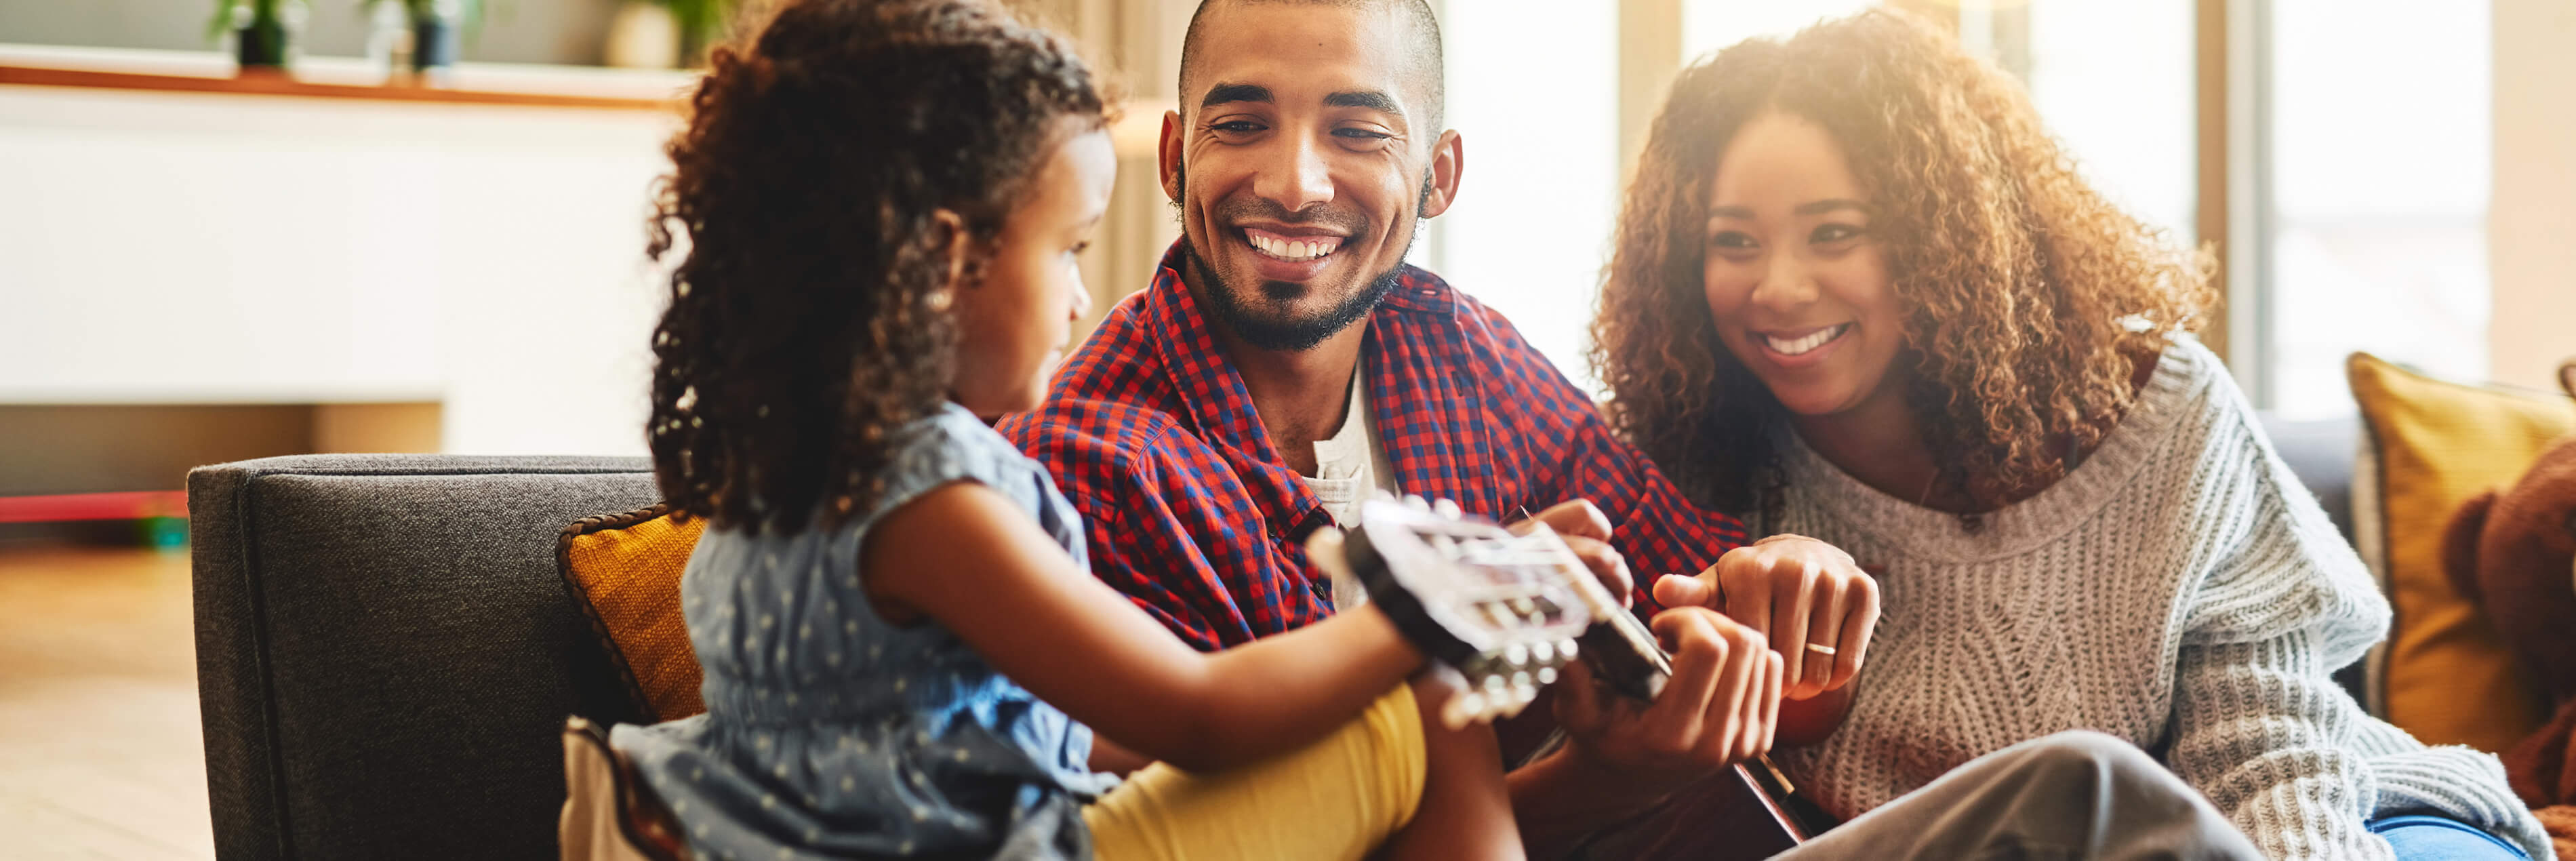 Family smiling playing guitar